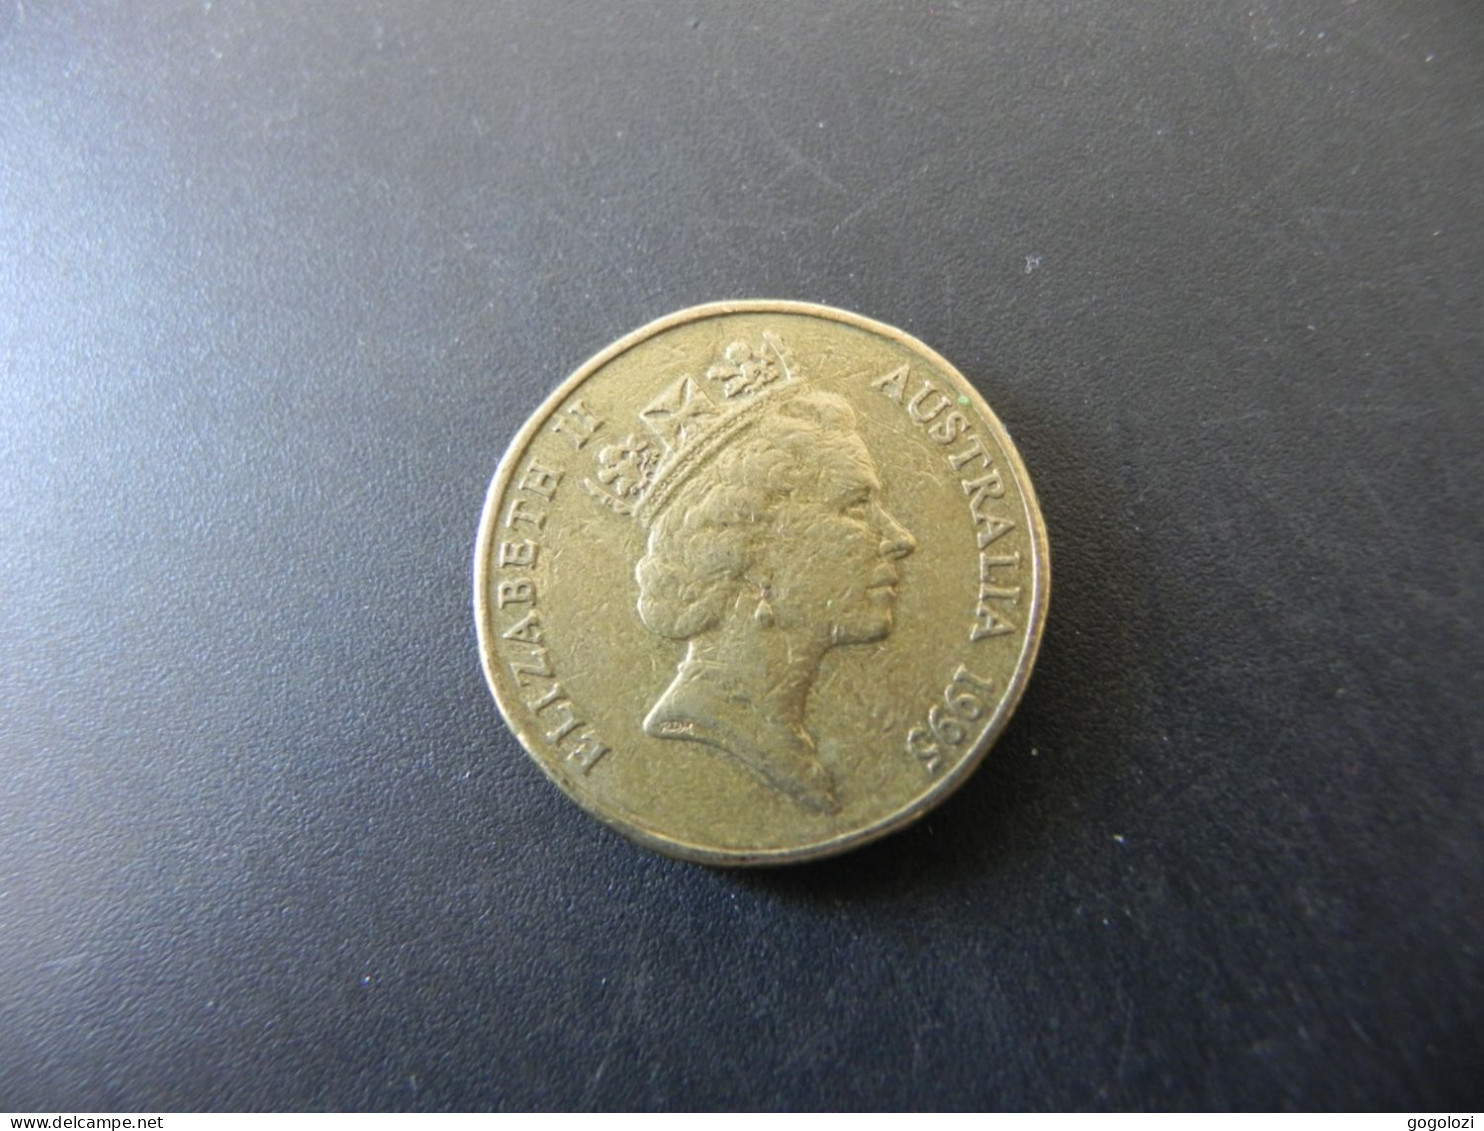 Australia 1 Dollar 1995 - Dollar